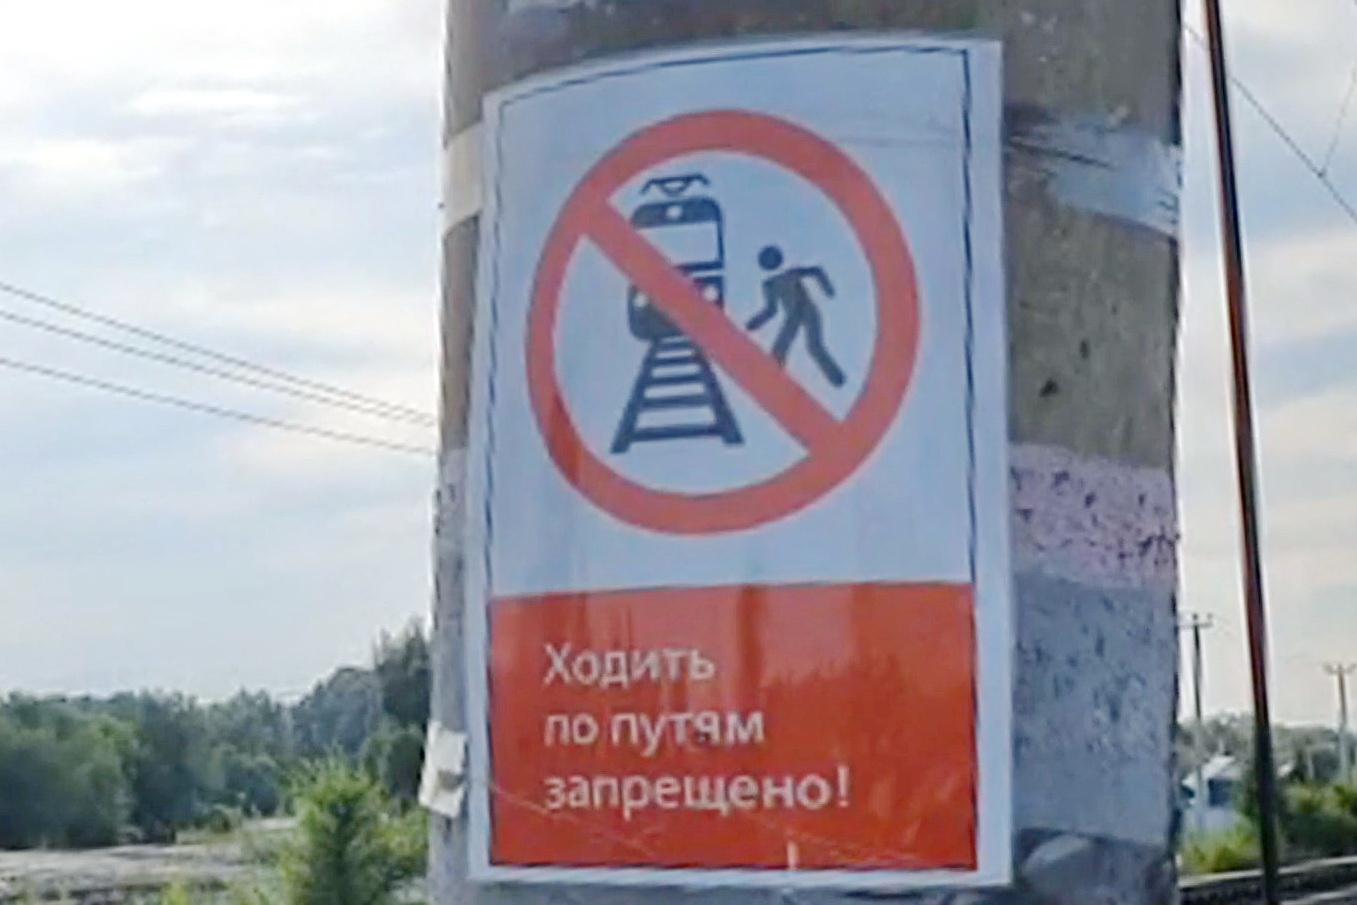 Ходить по путям запрещено